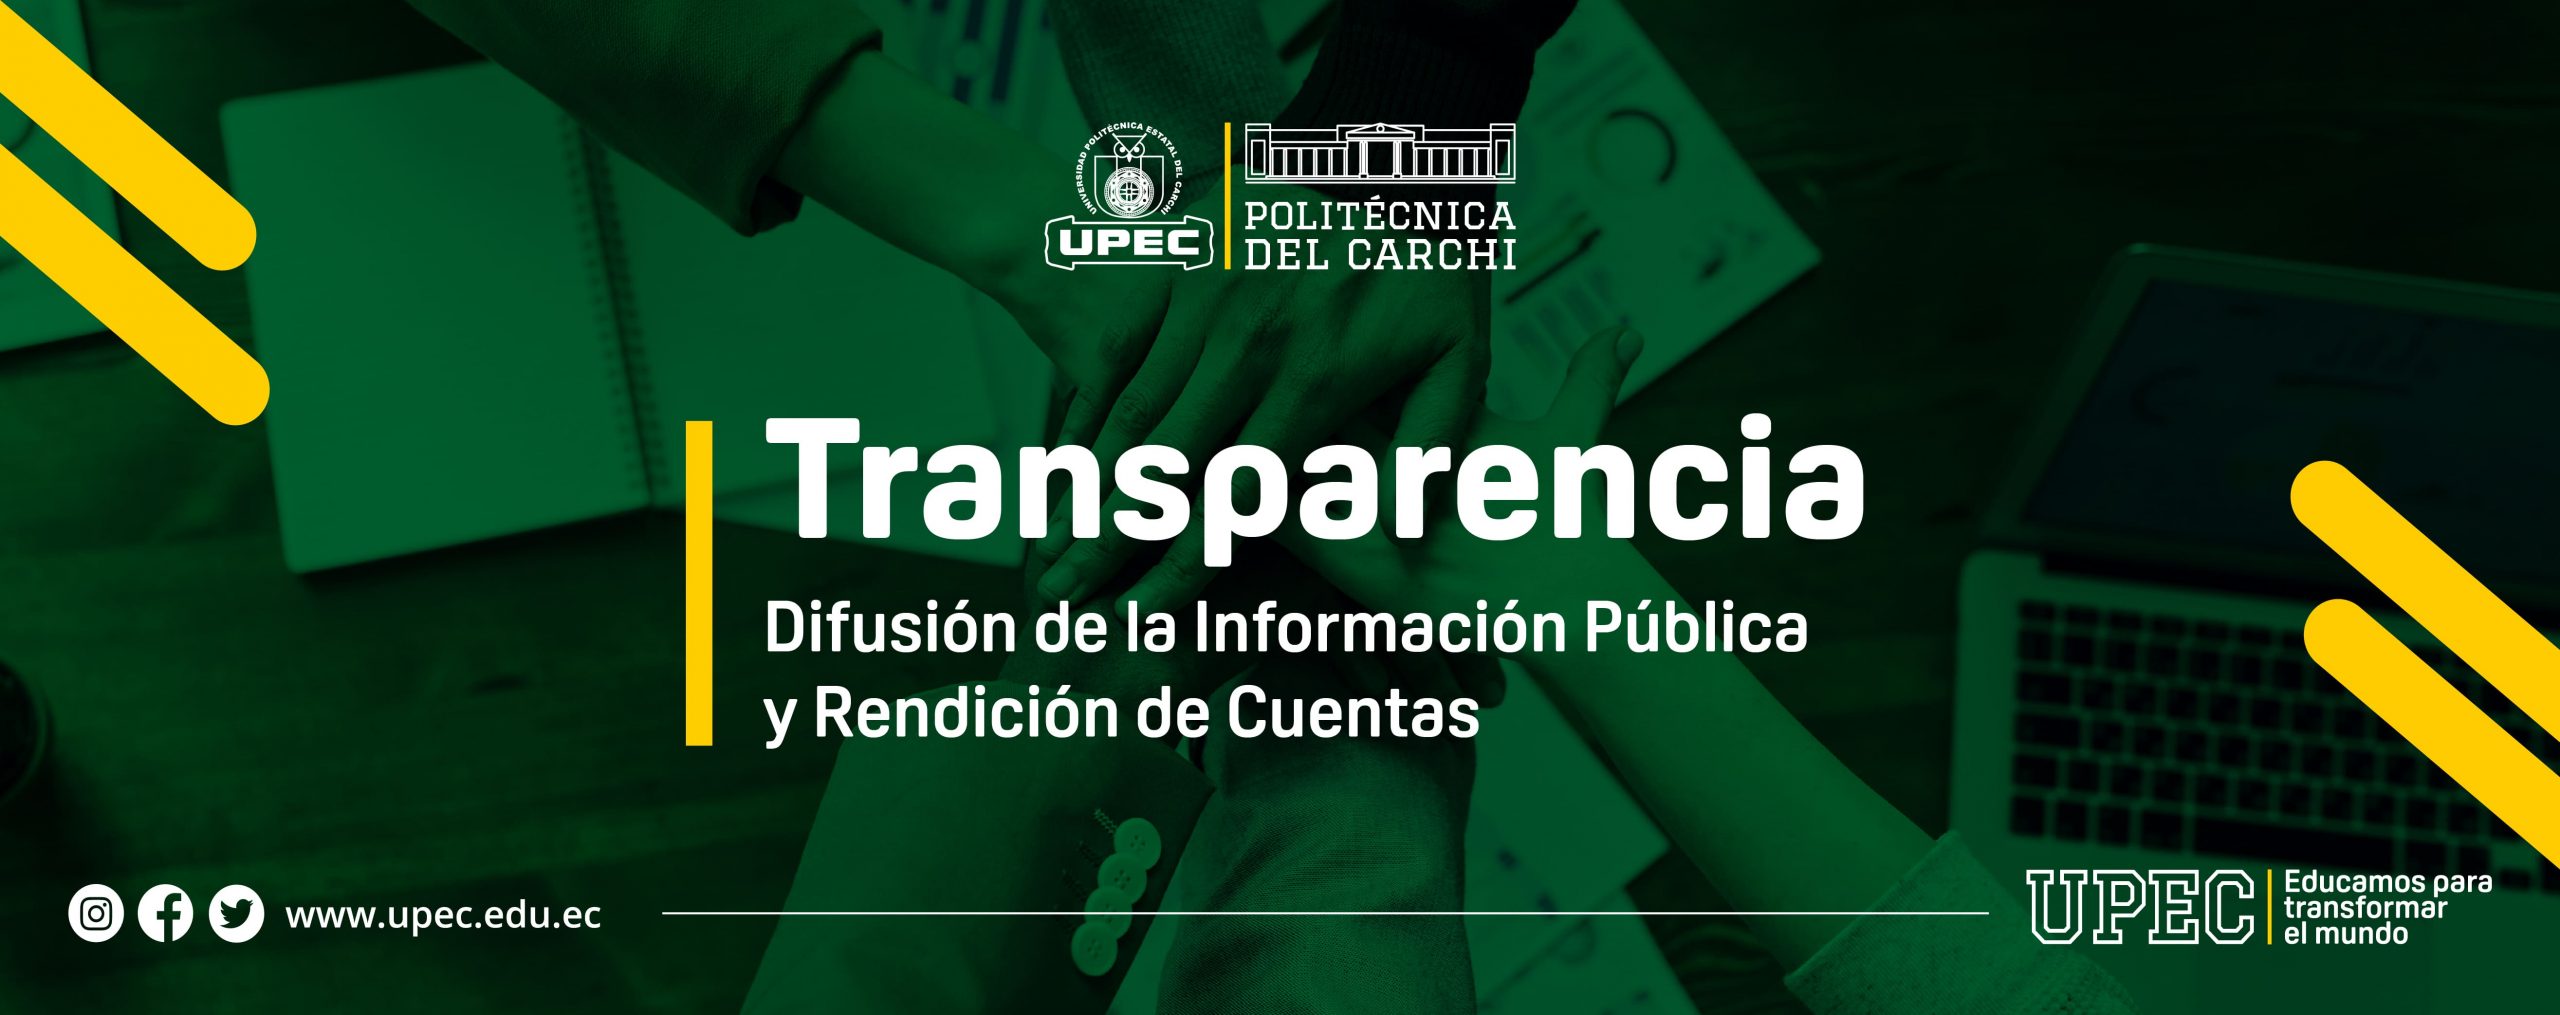 Transparencia_logo_principal